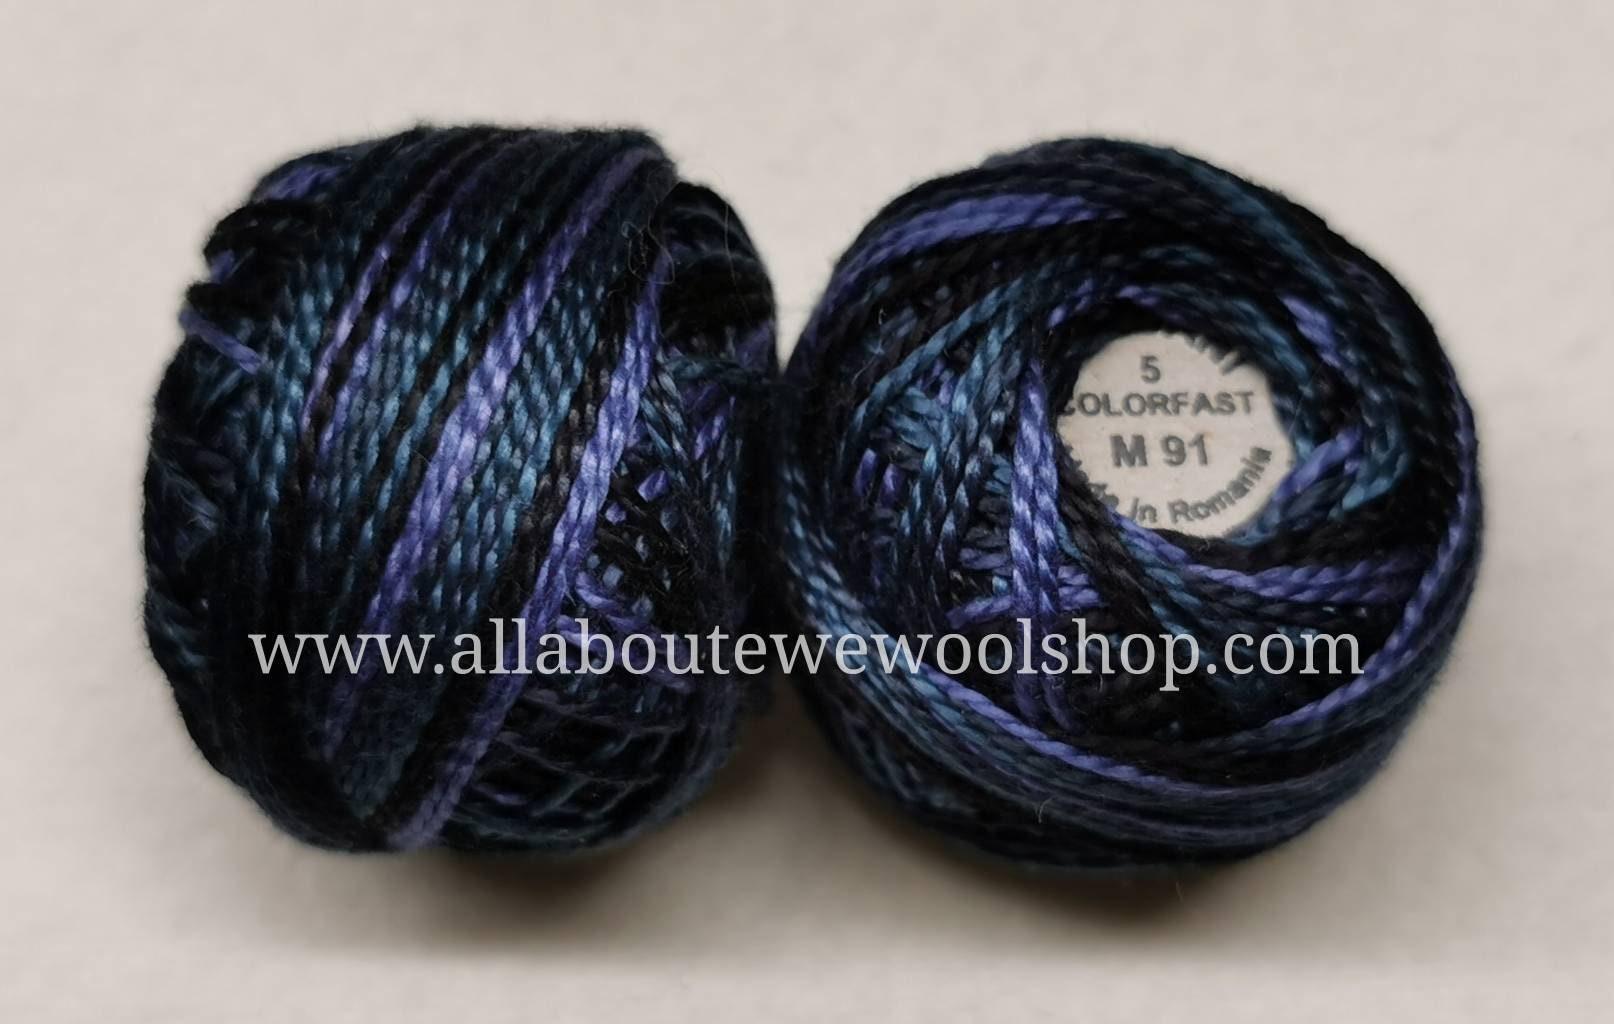 M91 #5 Valdani Pearl/Perle Cotton Thread - All About Ewe Wool Shop